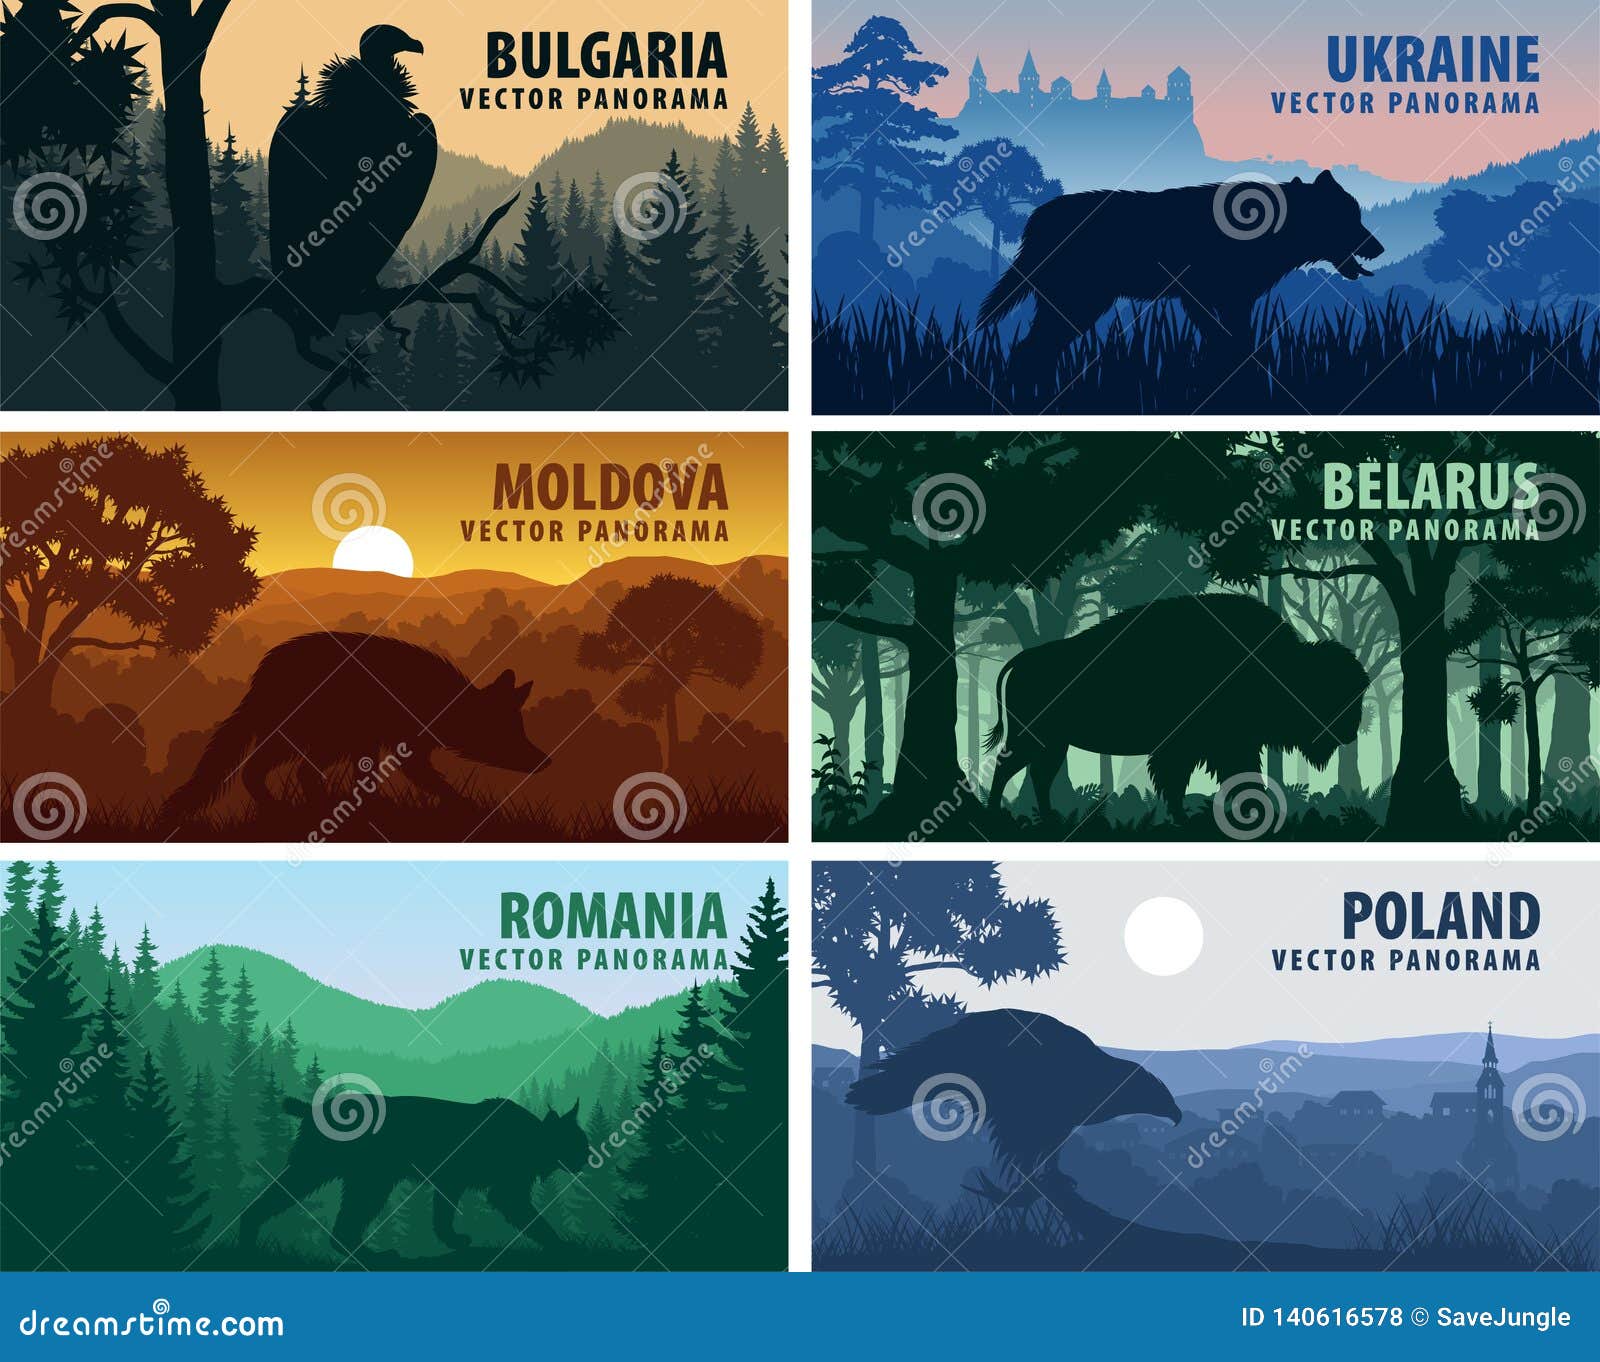 set of eastern europe countries: ukraine, bulgaria, moldova, poland, romania, belarus with animals